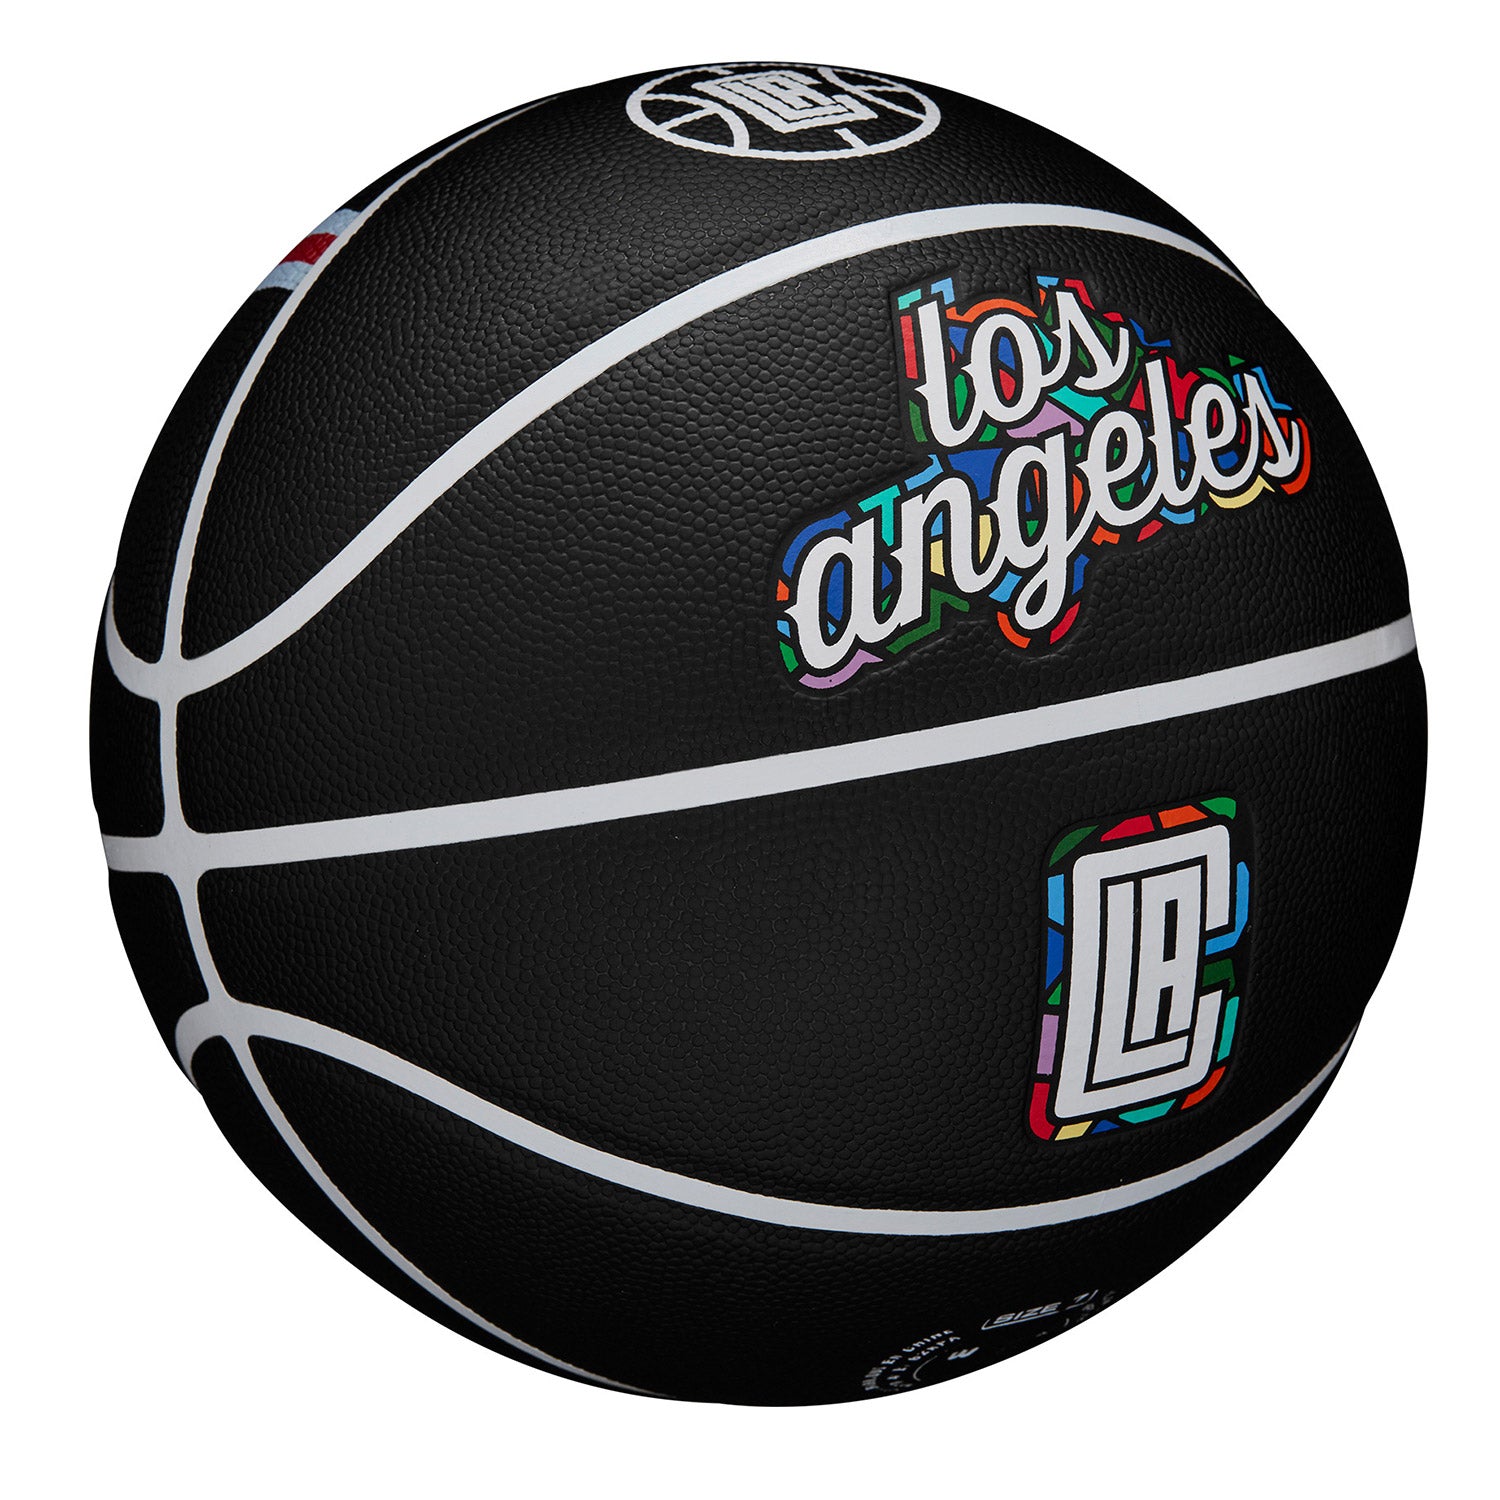 Cheap City Edition Los Angeles Clippers Kawhi Leonard Basketball